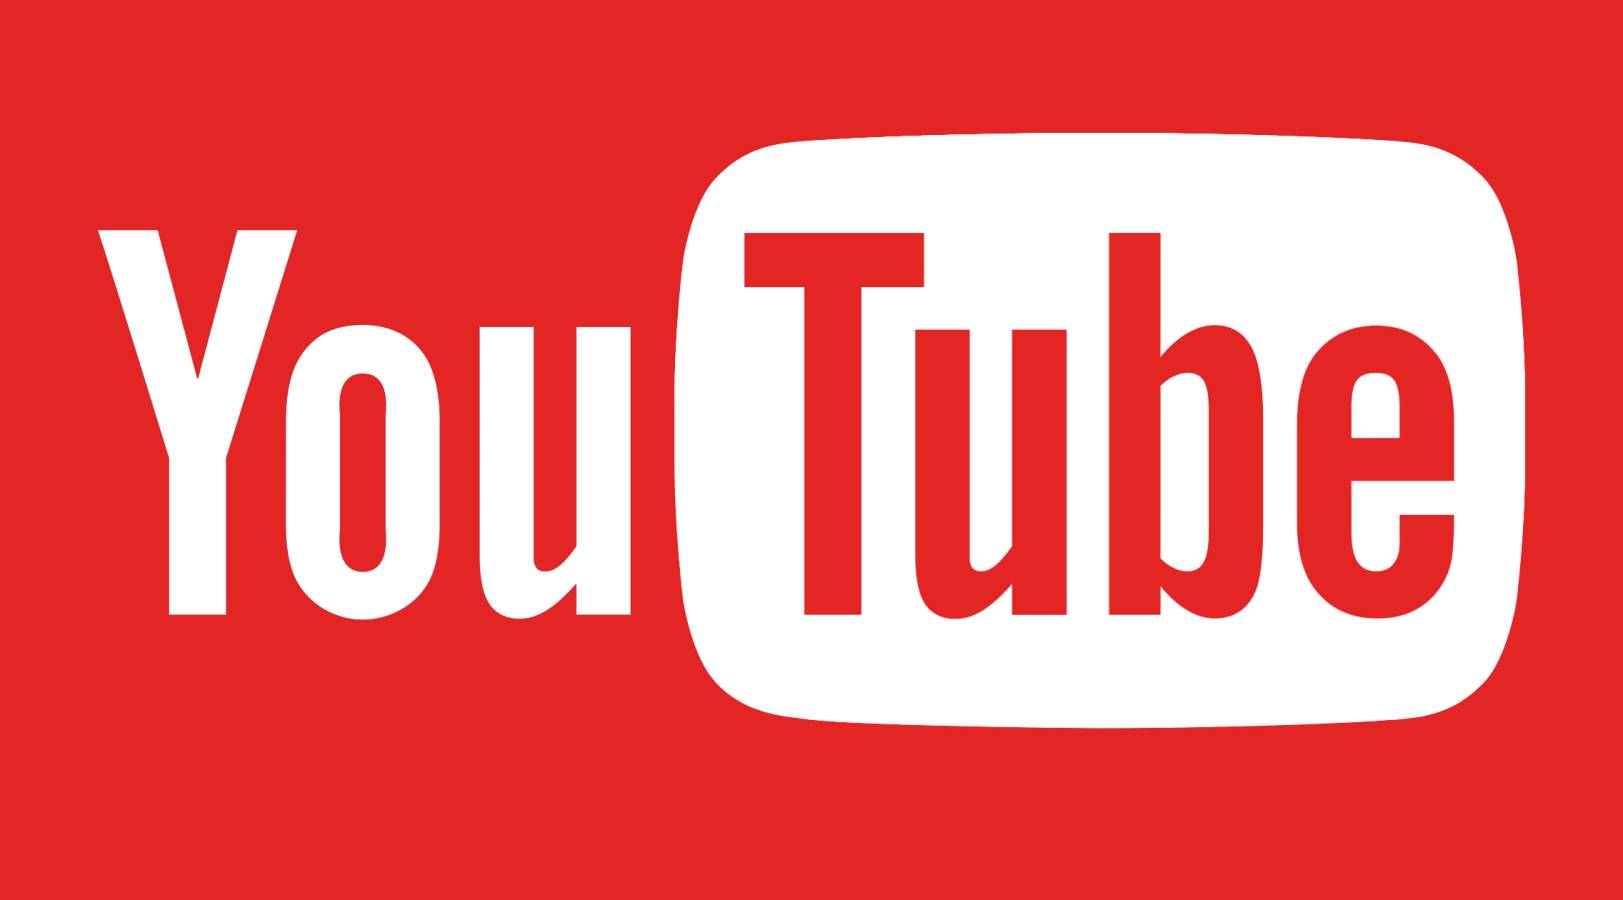 YouTube Update a fost Lansat Acum cu Noutati in Telefoane si Tablete